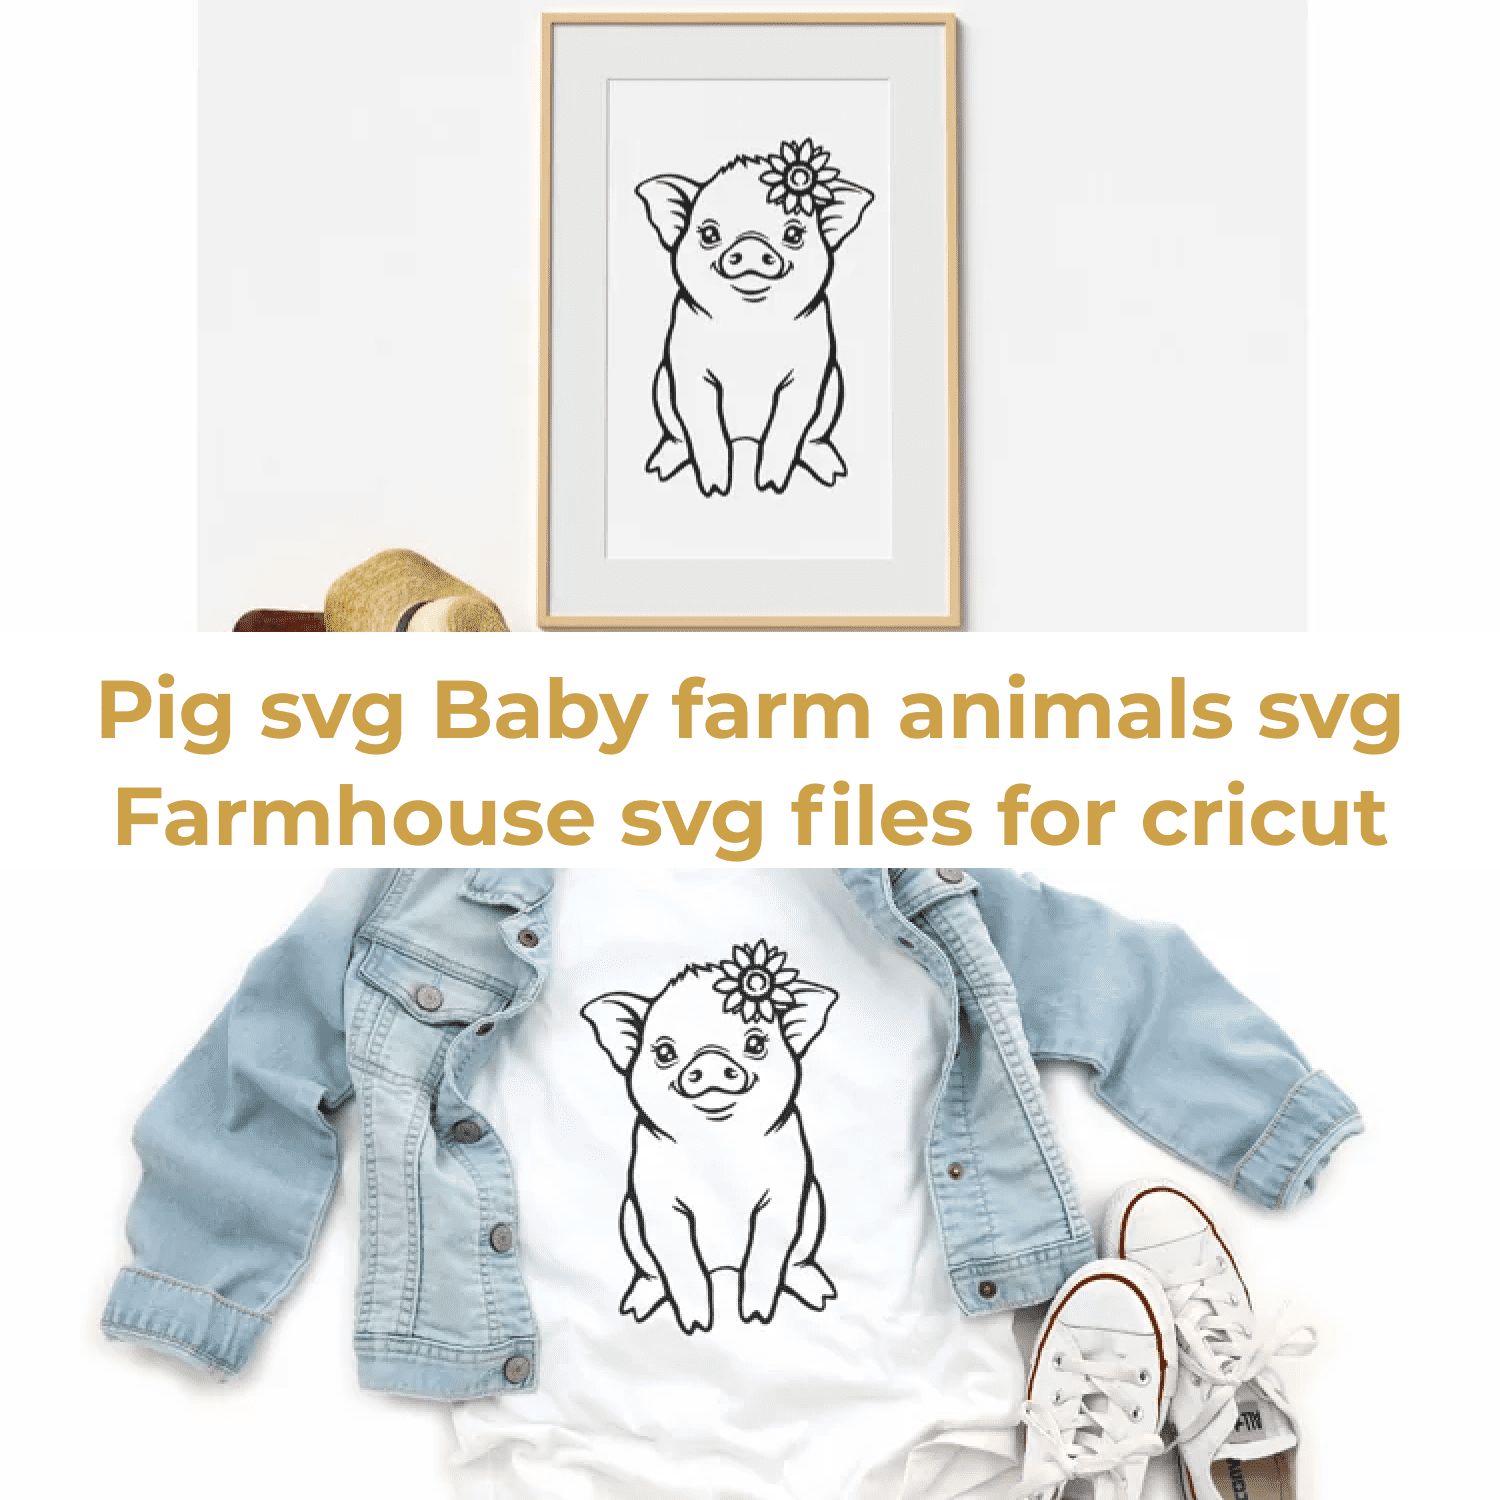 Pig svg Baby farm animals svg Farmhouse svg files for cricut cover.